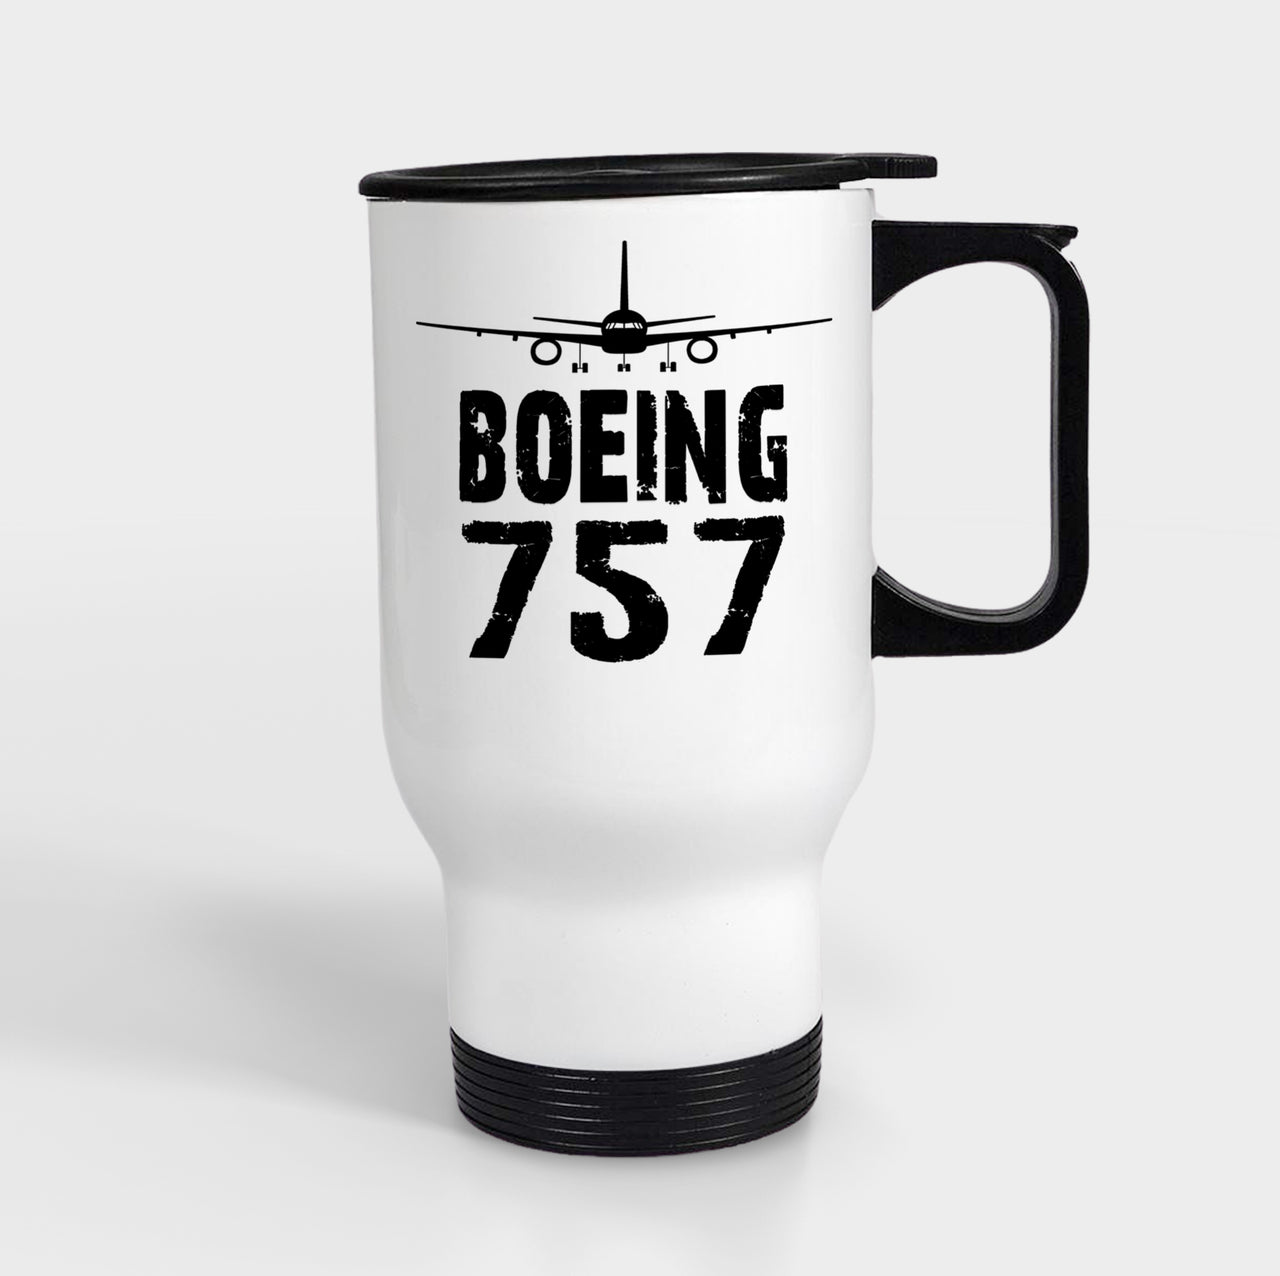 Boeing 757 & Plane Designed Travel Mugs (With Holder)